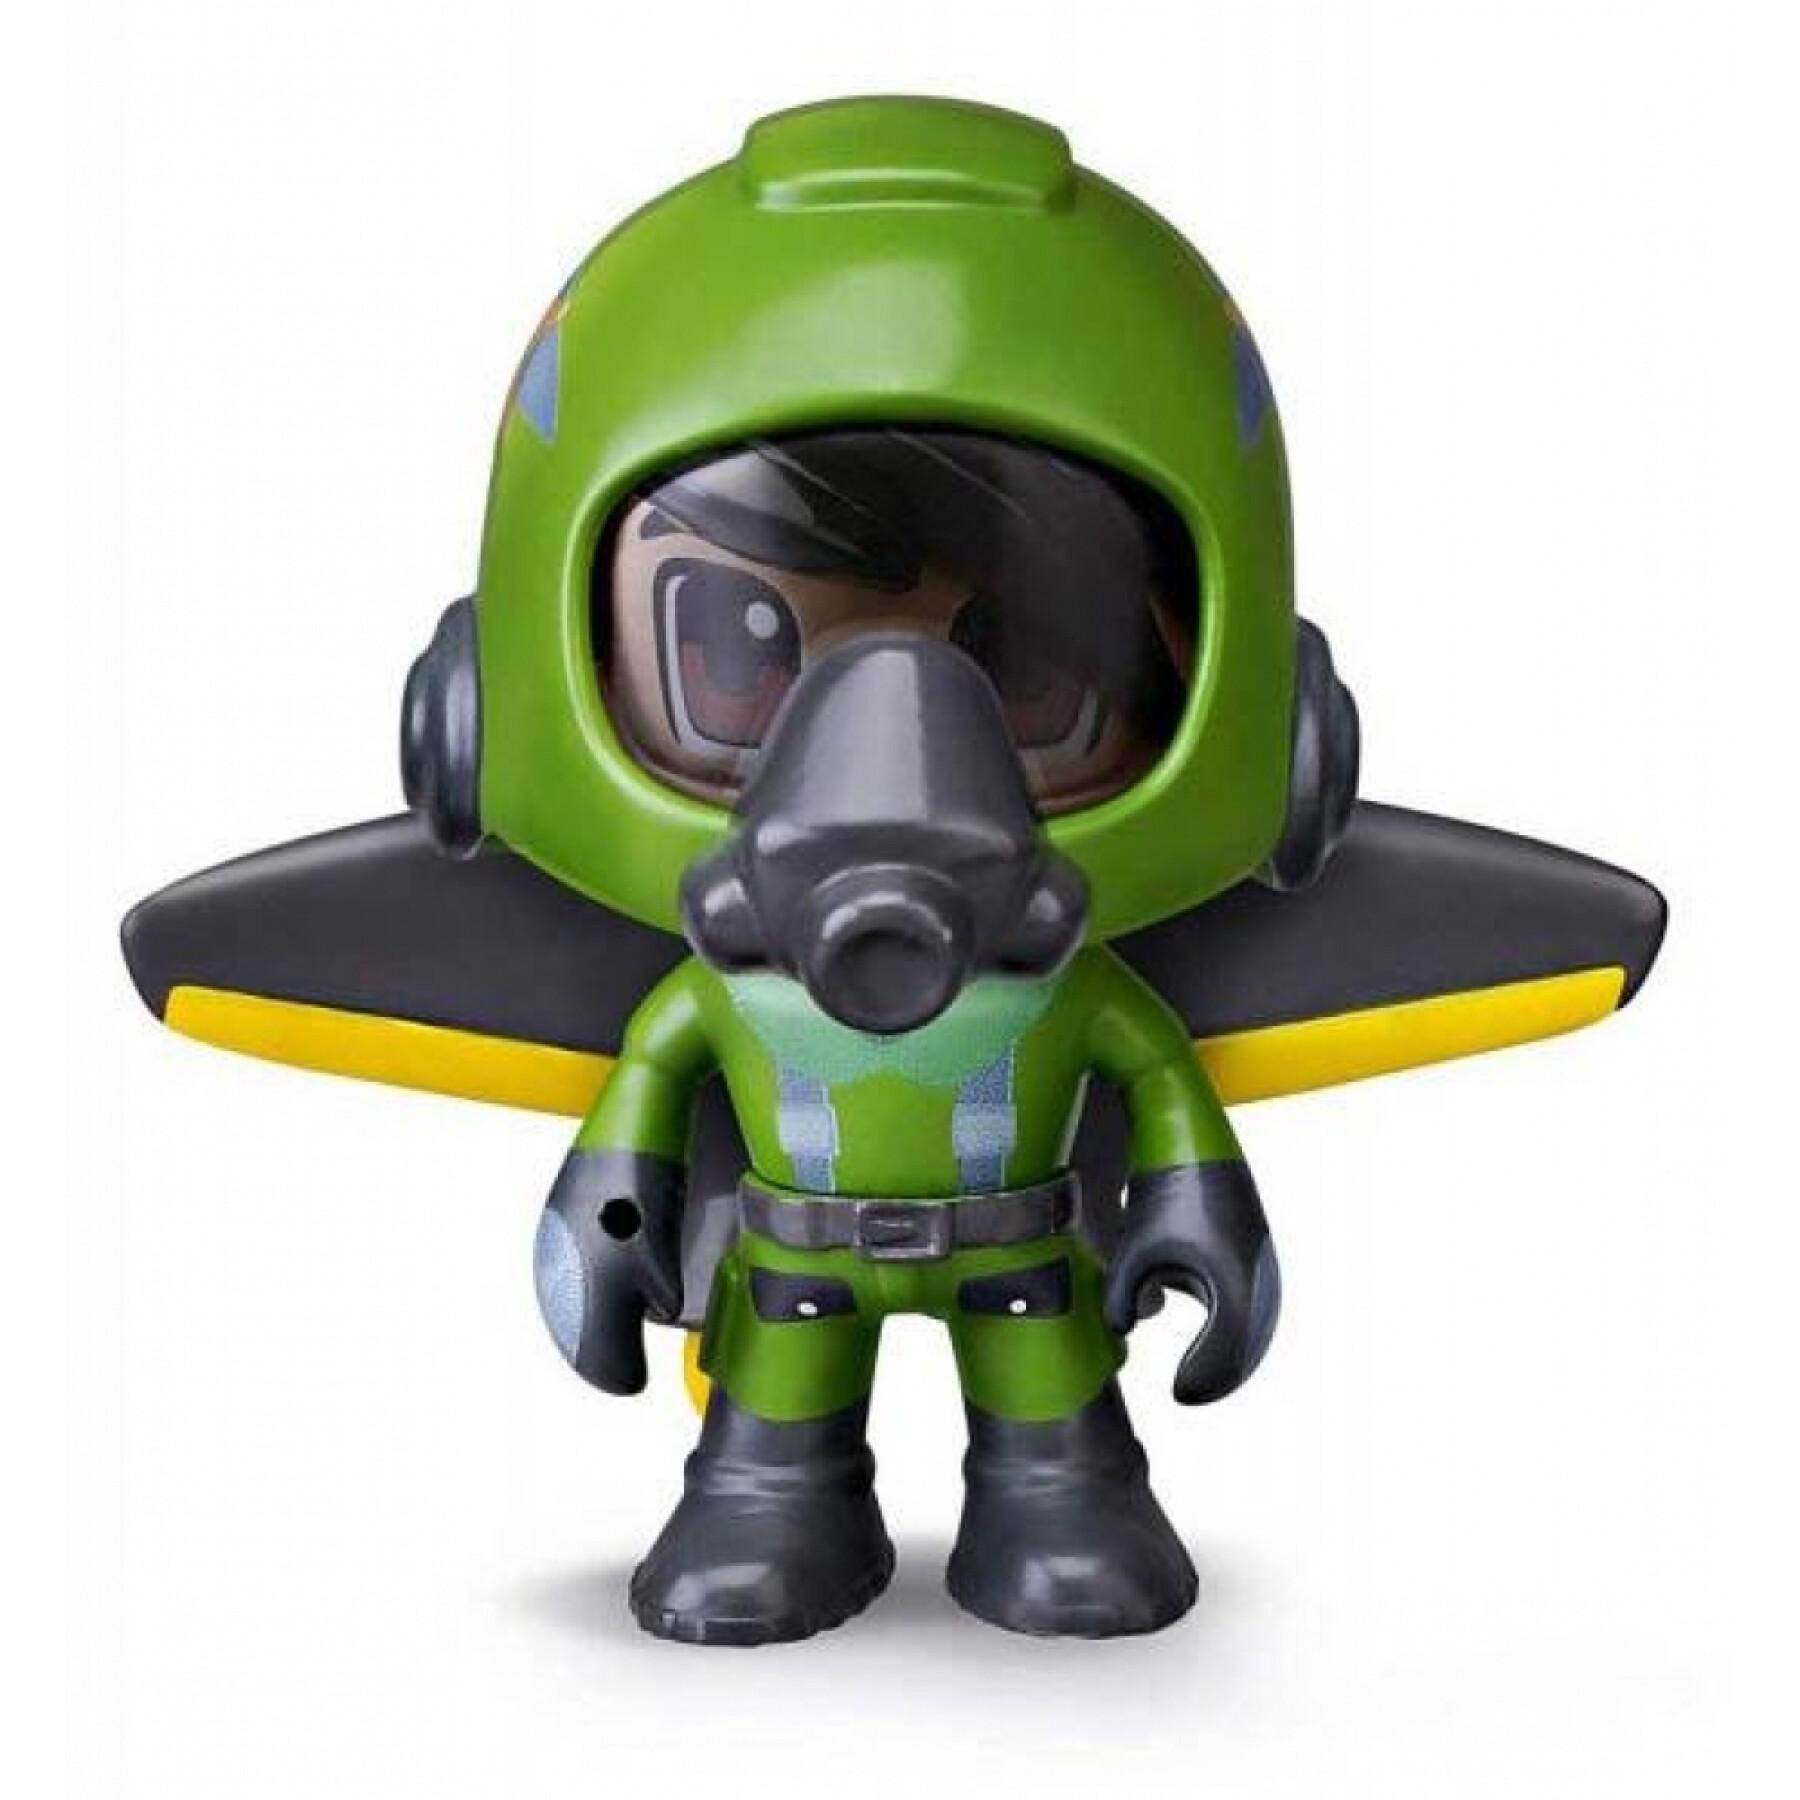 Paratrooper figurine set Pinypon